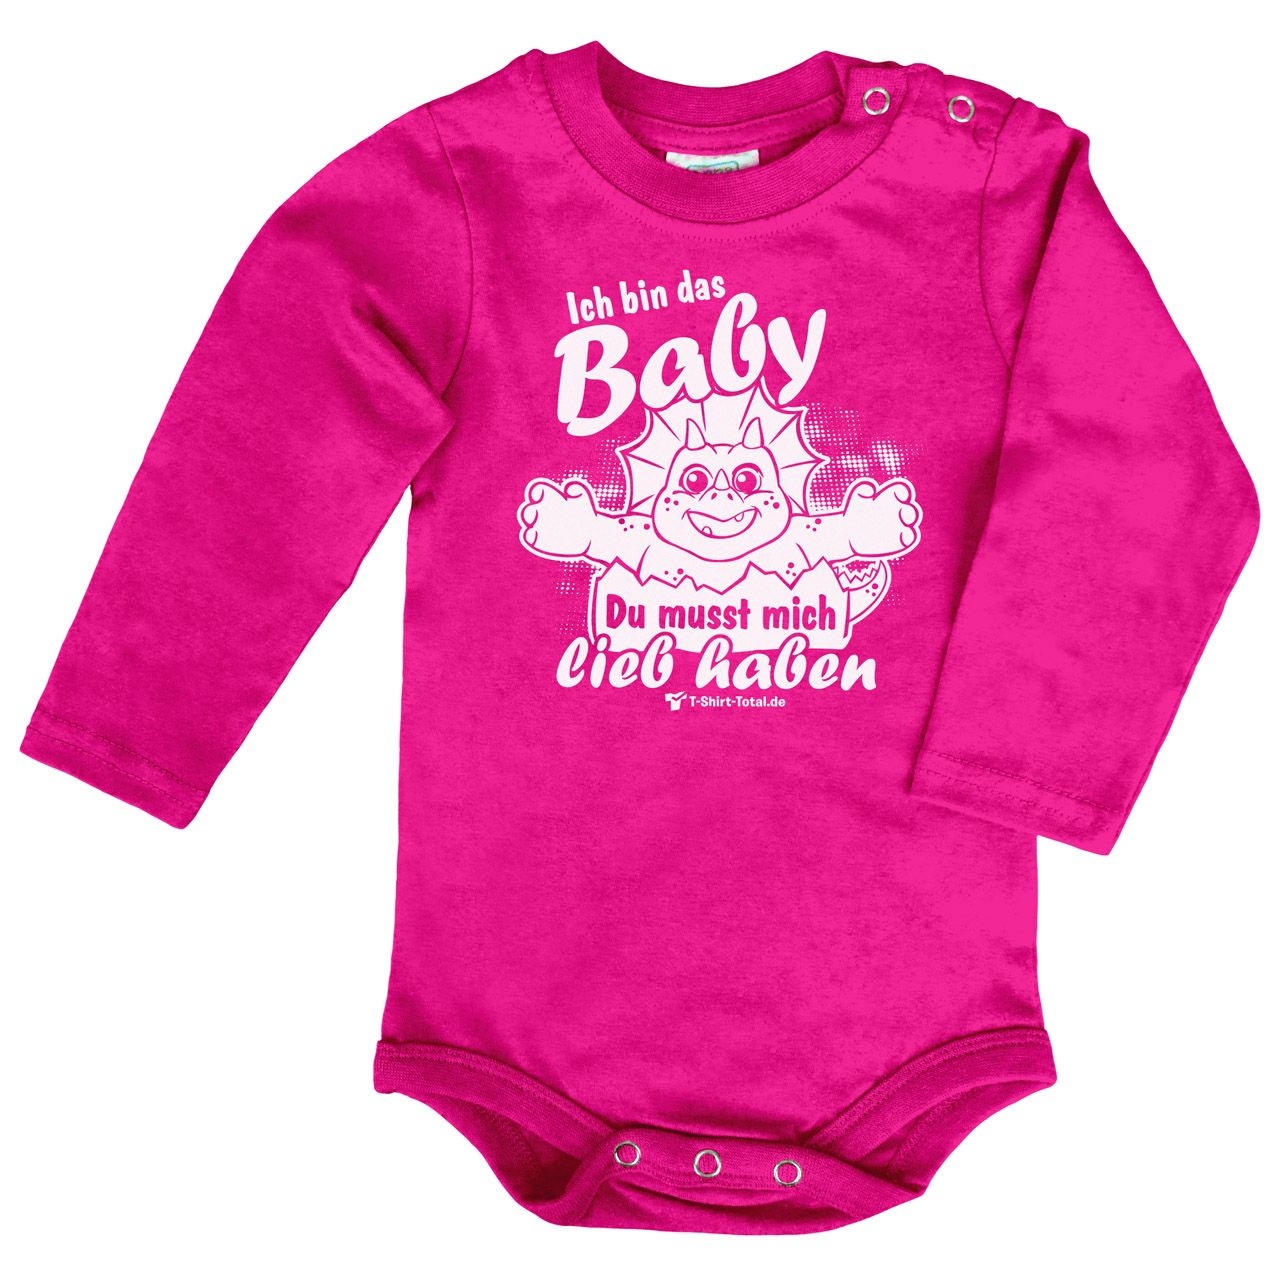 Bin das Baby Baby Body Langarm pink 68 / 74